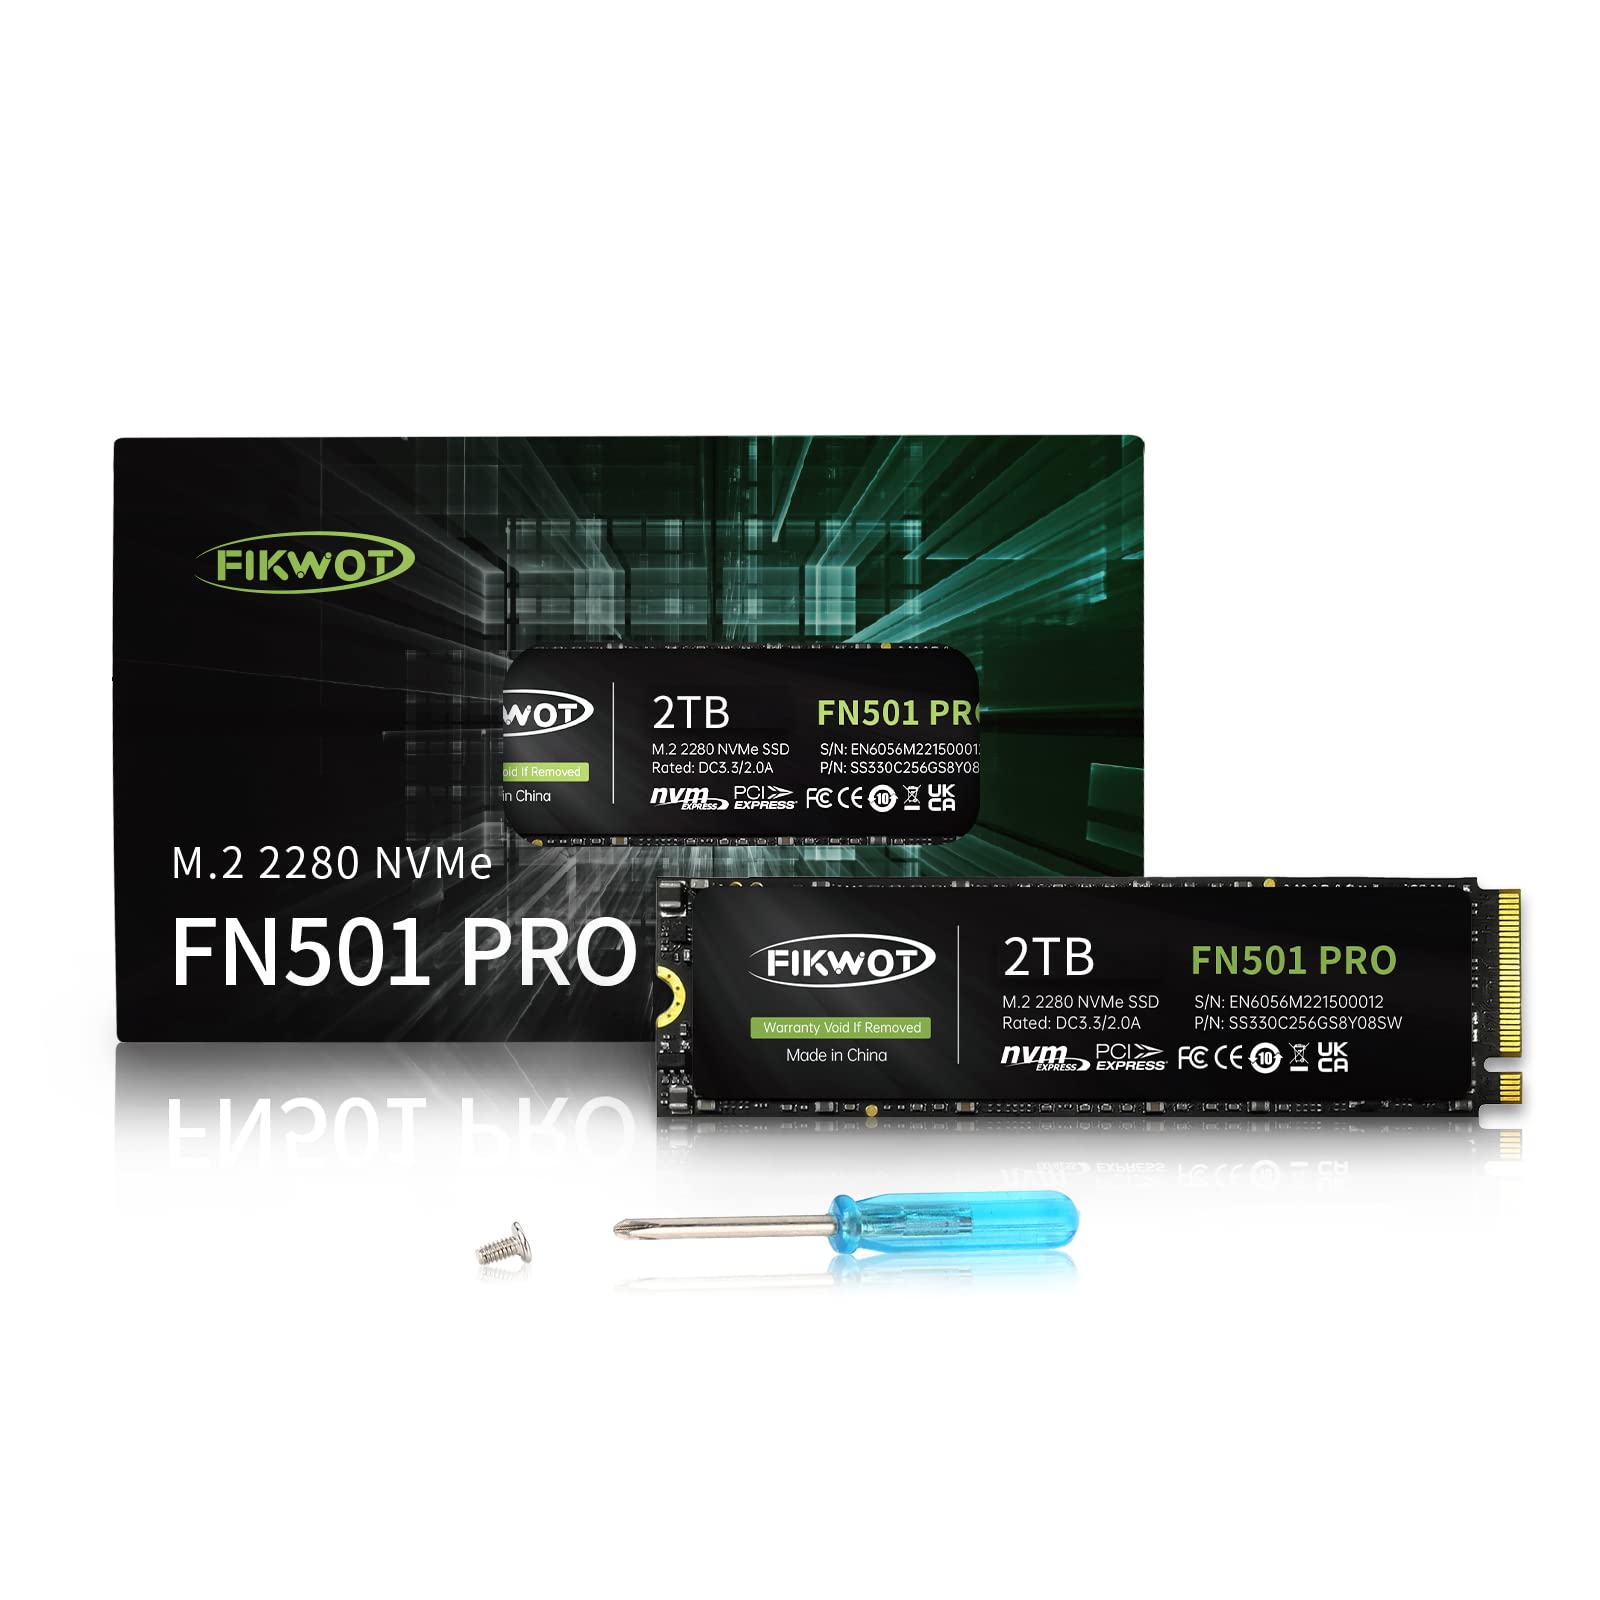 Fikwot FN501 Pro 2TB NVMe SSD M.2 2280 PCIe Gen3 x4 内蔵 SSD グラフェン冷却ステッカー付き 最大 3500MB/s SLC キャッシュ 3D NAND TLC ラップトップ、 デスクトップと互換性あり メーカー3年保証